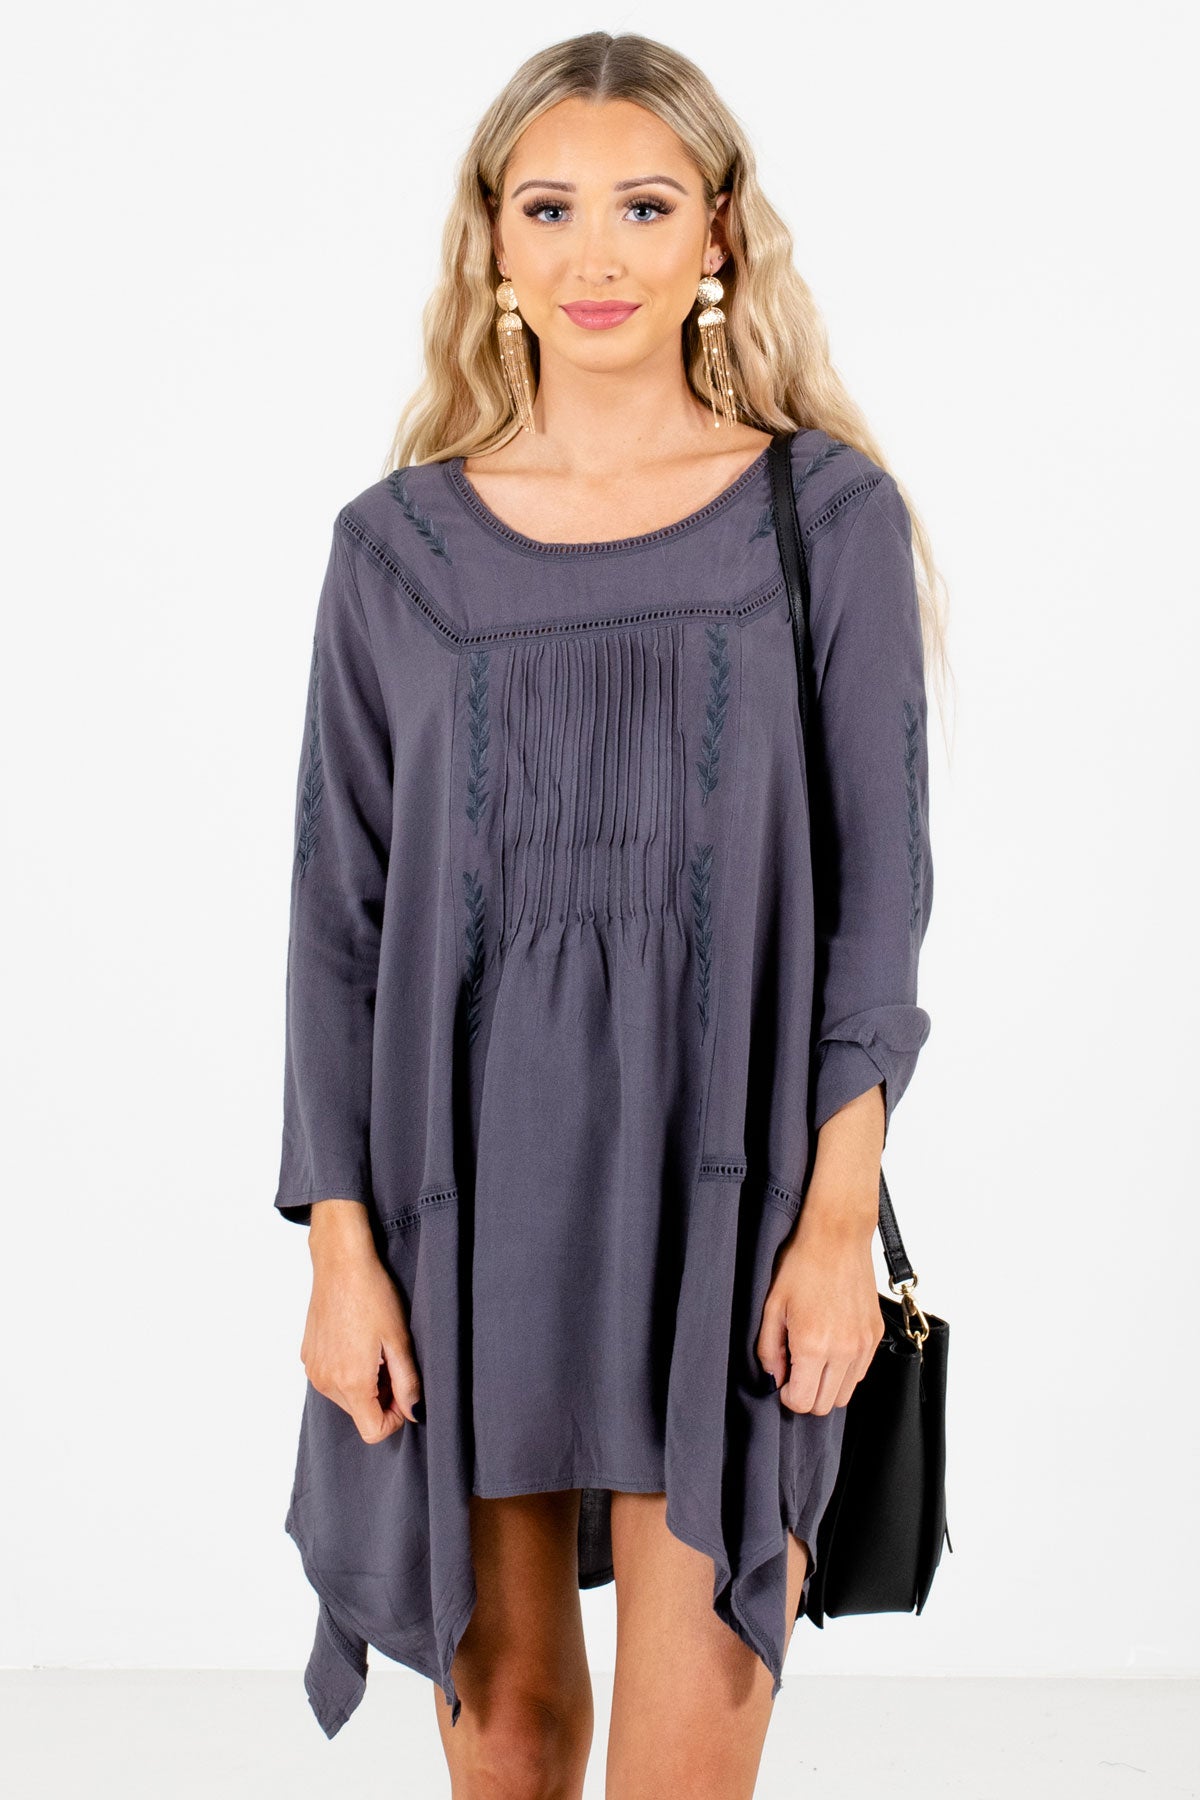 Women’s Charcoal Gray Bohemian Style Boutique Mini Dress